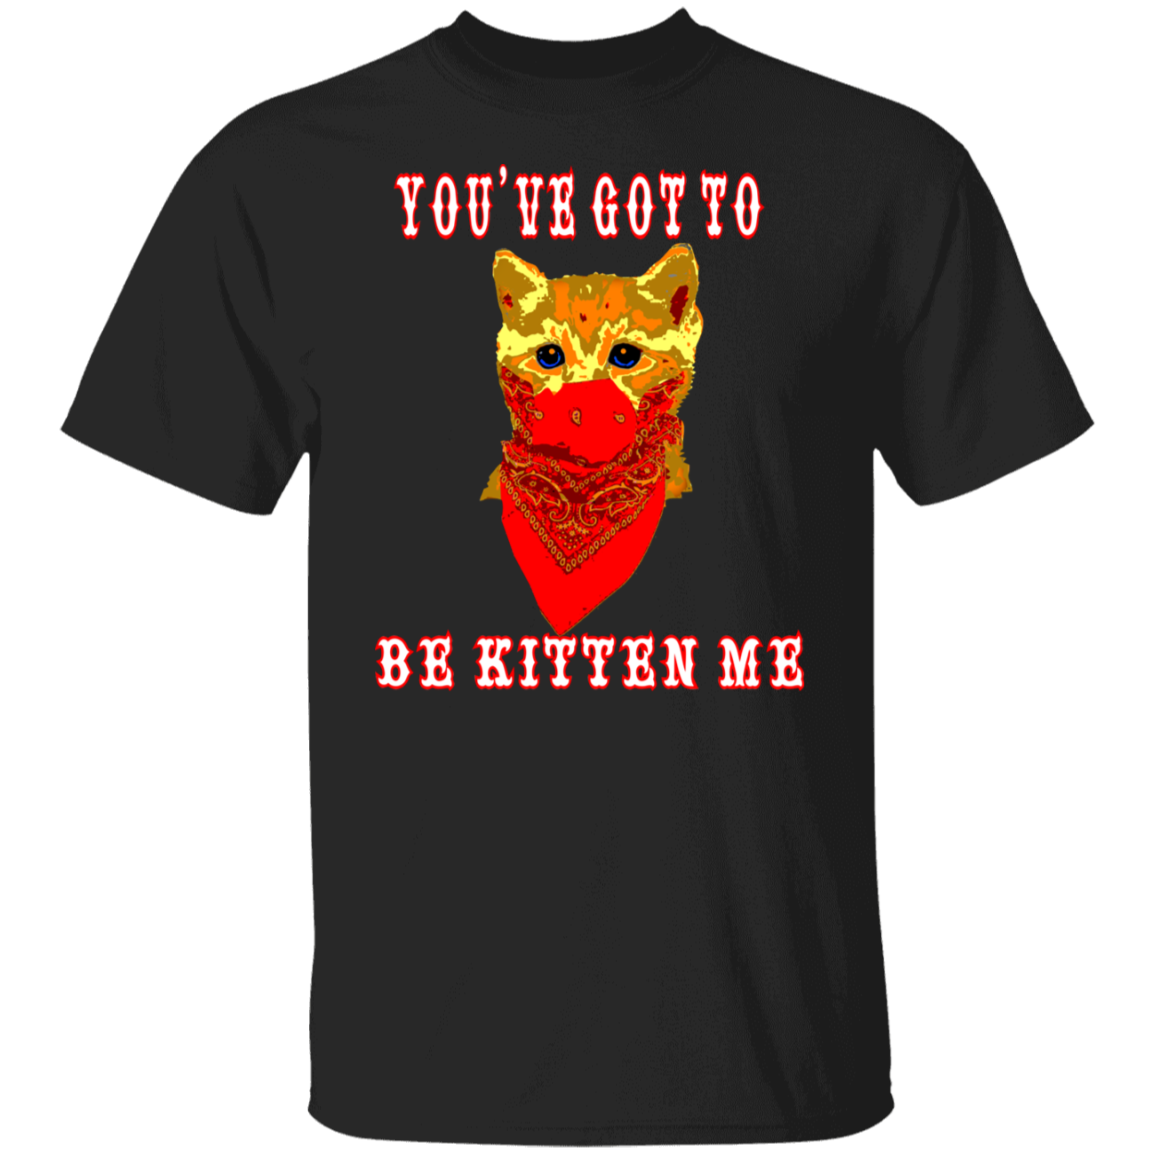 ArtichokeUSA Custom Design. You've Got To Be Kitten Me?! 2020, Not What We Expected. 5.3 oz. T-Shirt